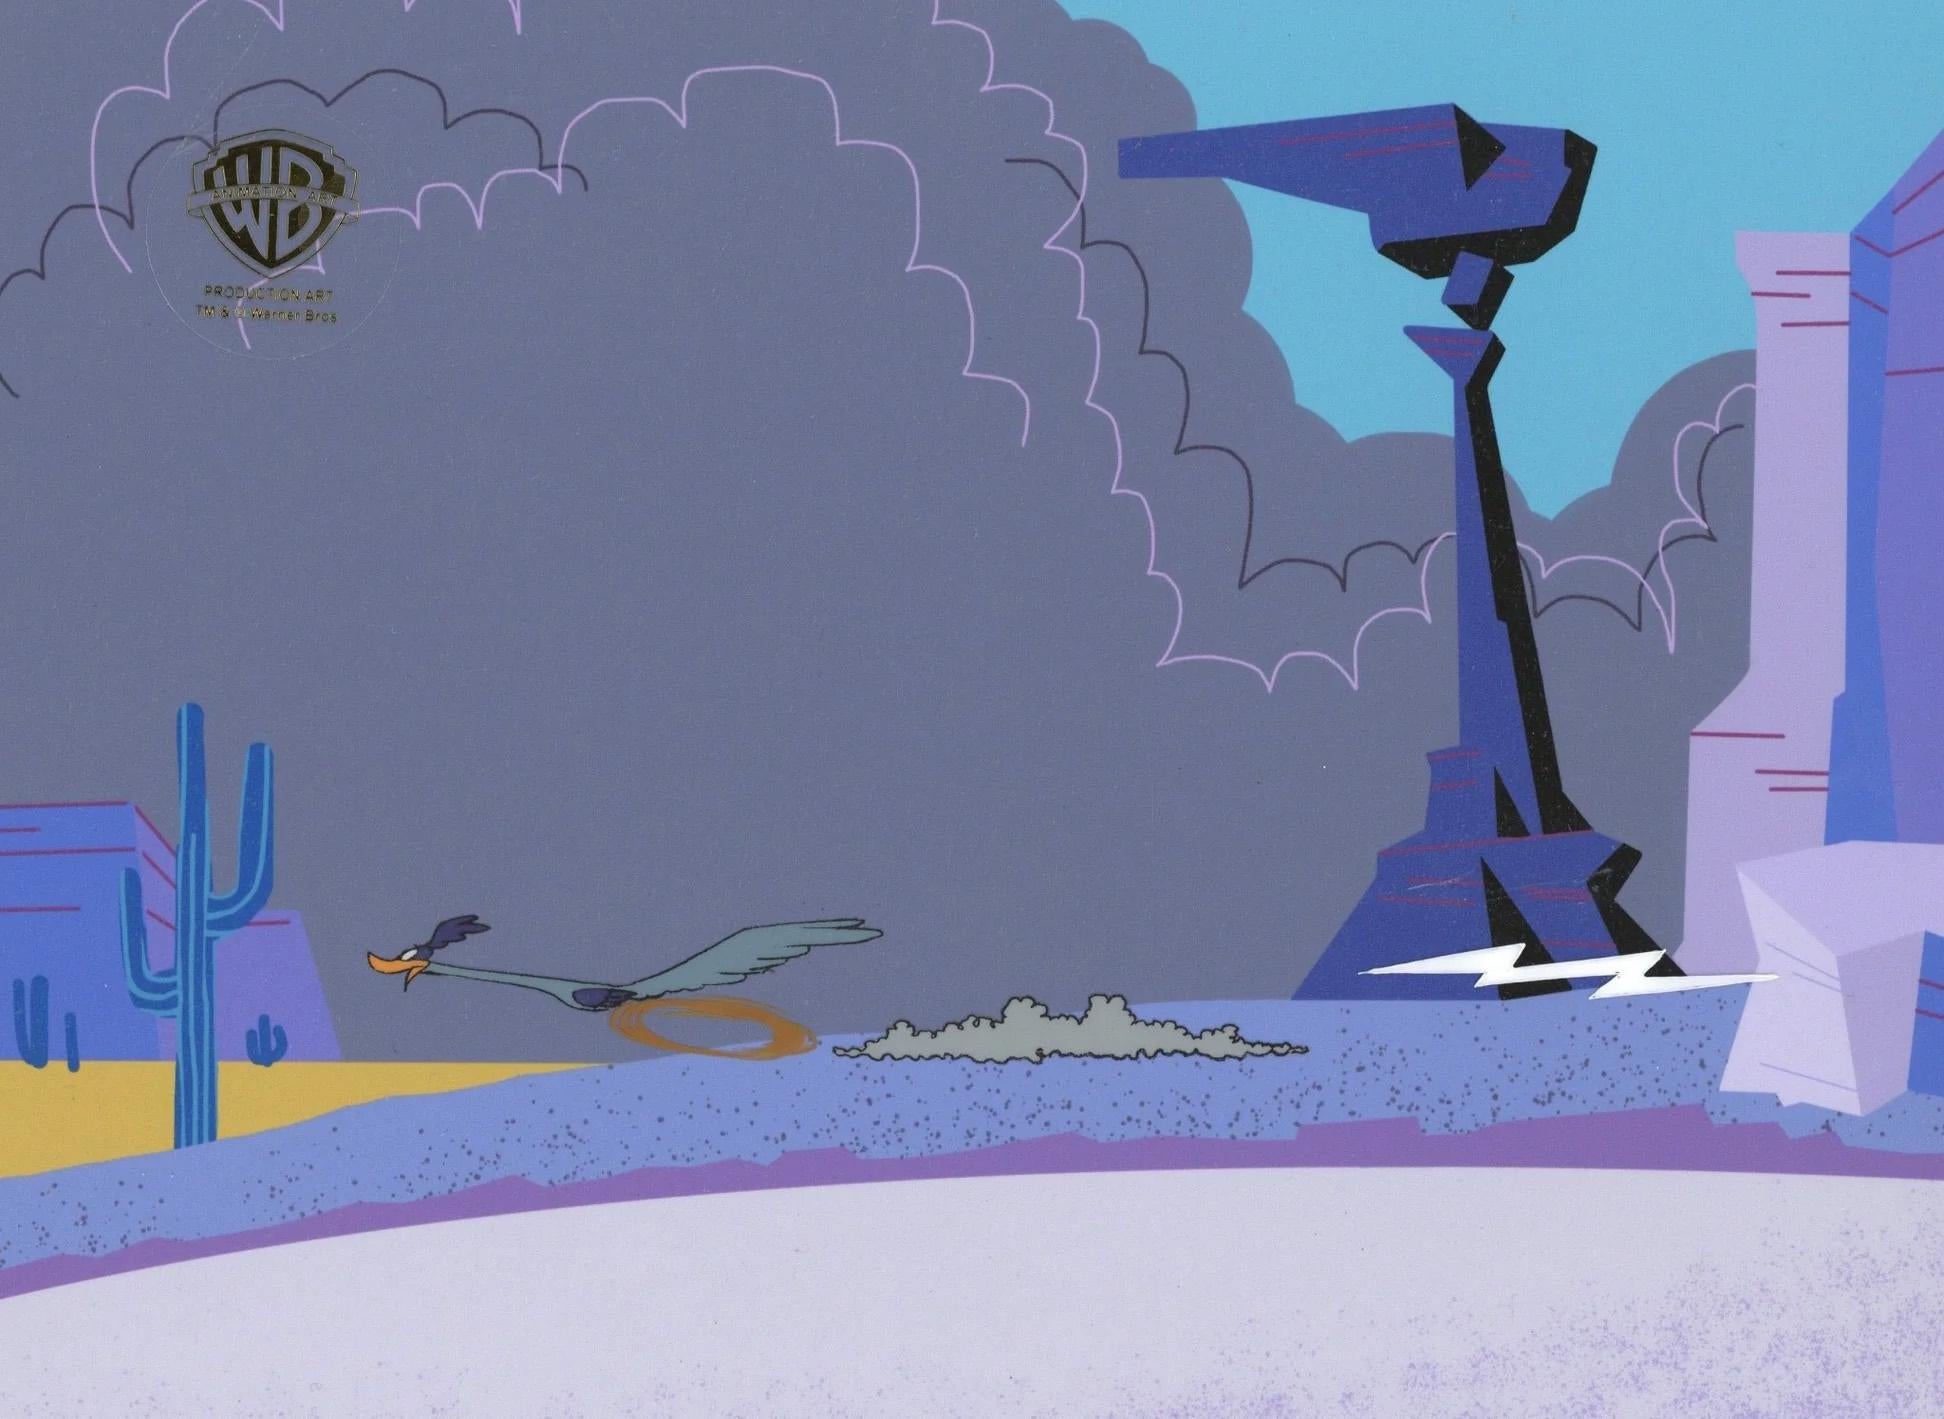 Looney Tunes Original Production Cel: Road Runner - Art by Looney Tunes Studio Artists